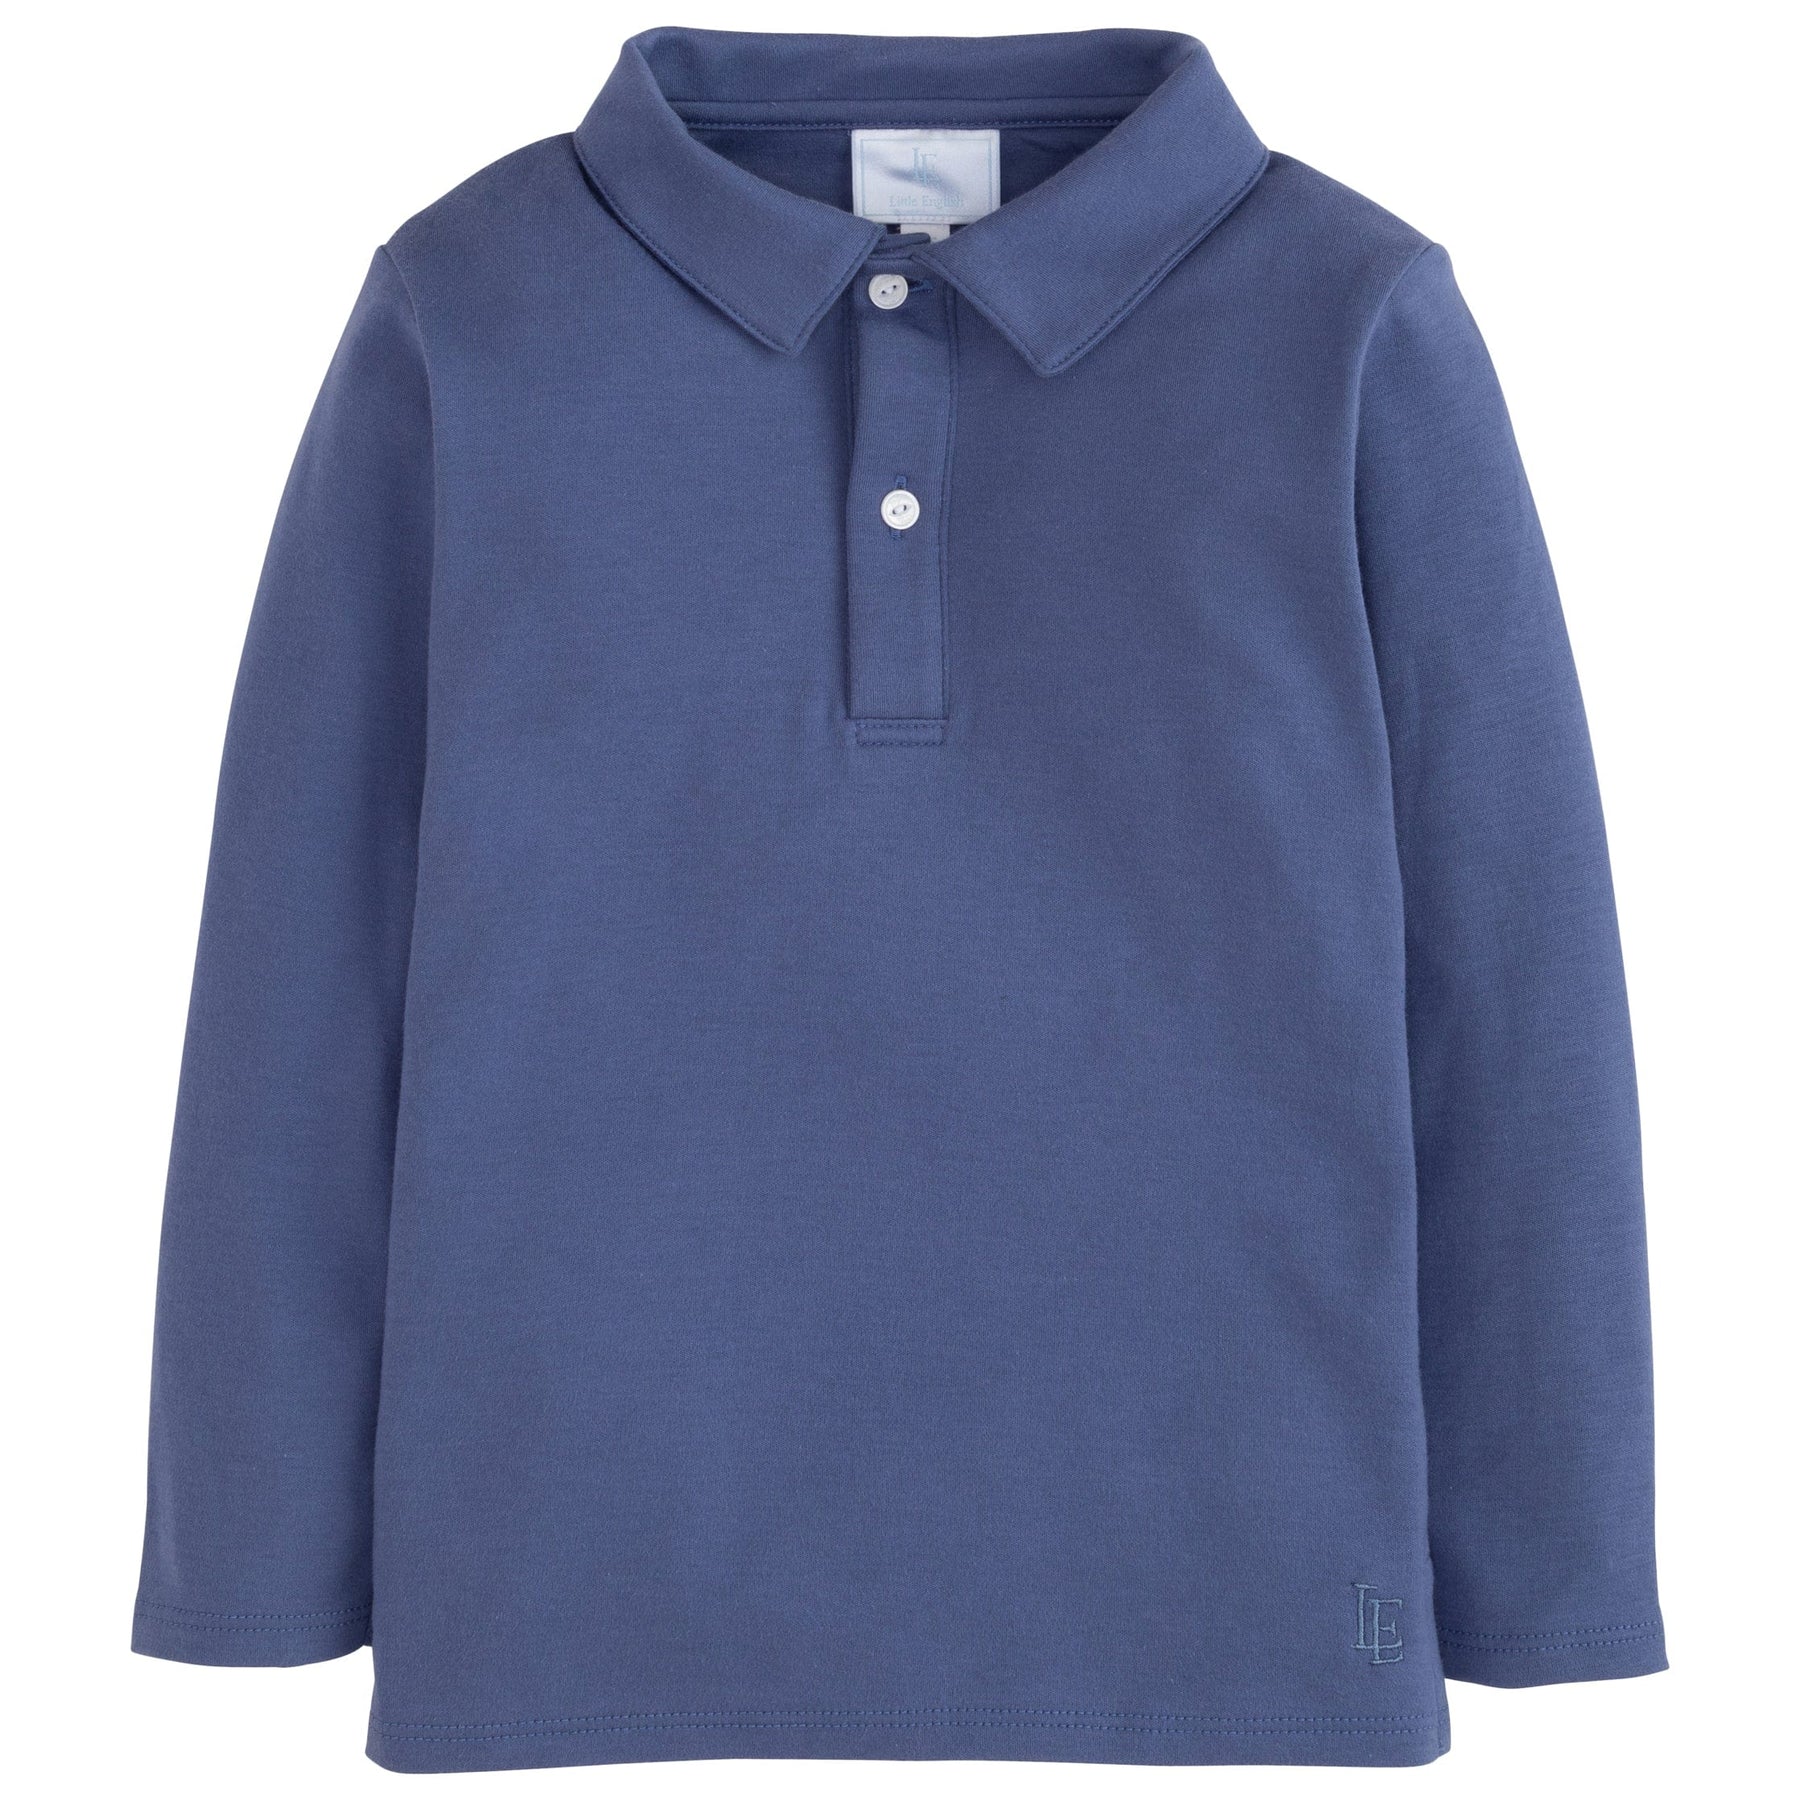 seguridadindustrialcr classic chidlrens clothing boys long sleeve gray/blue polo